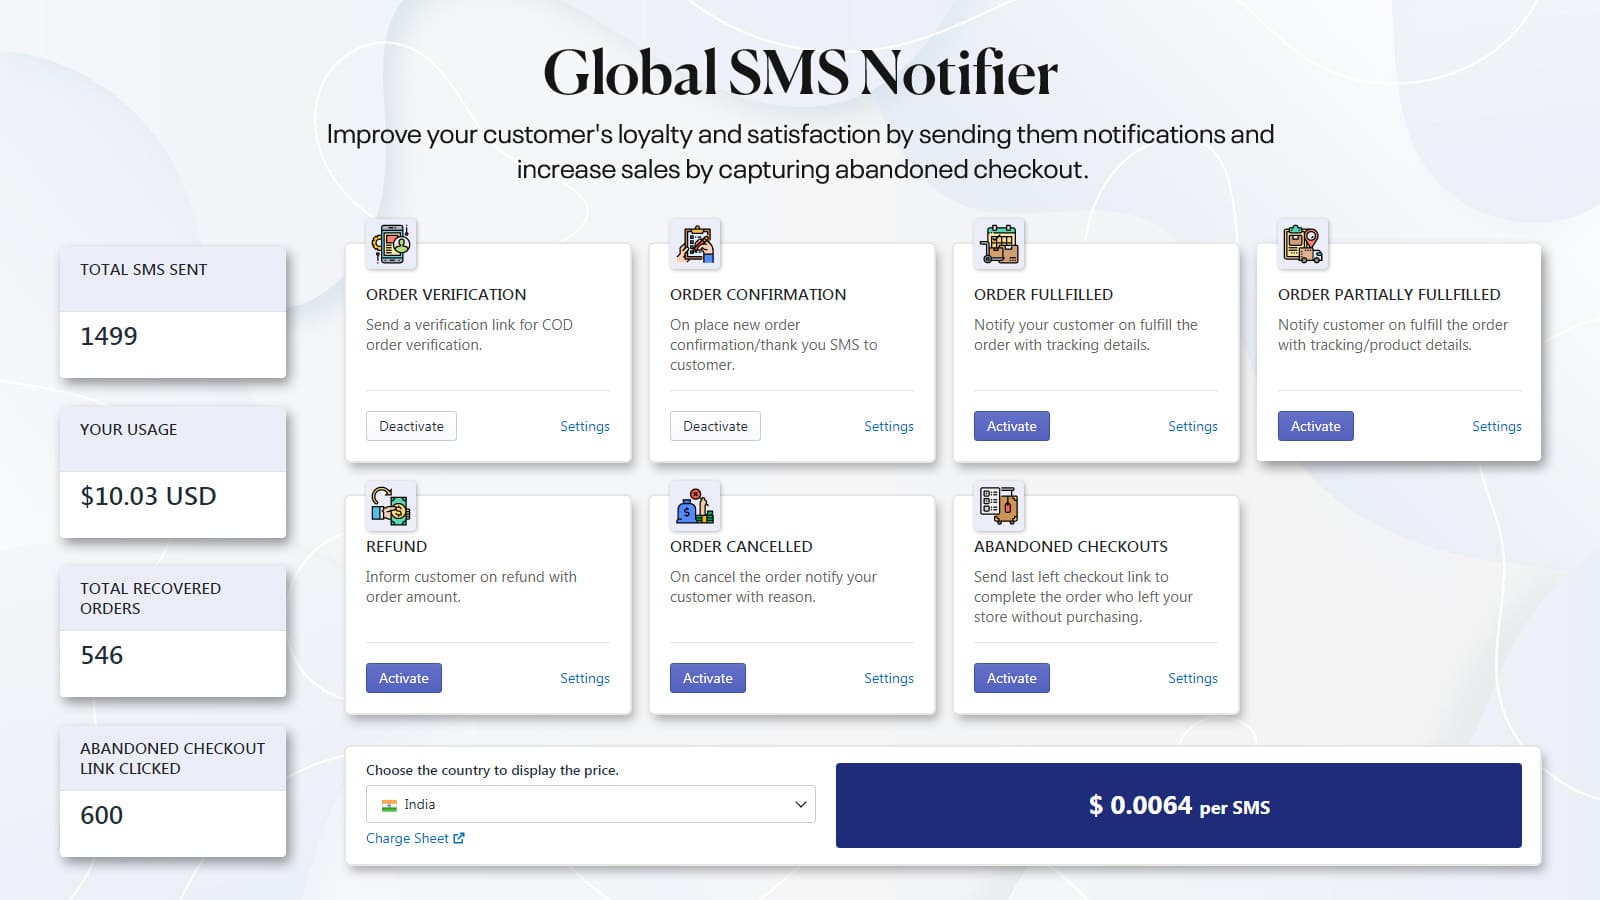 Global SMS Notifier